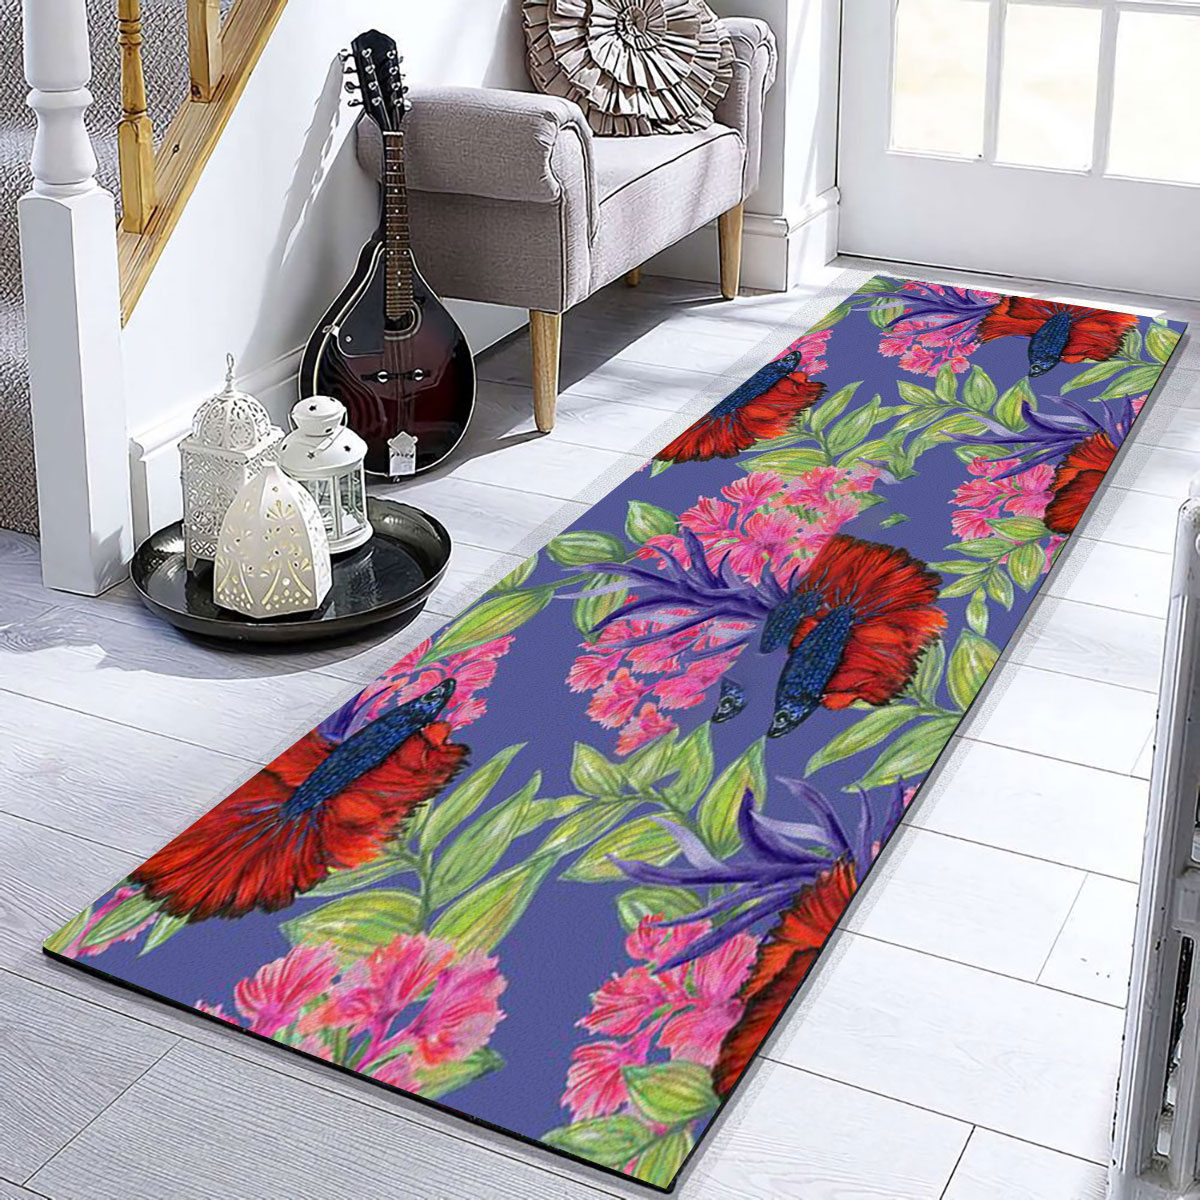 Floral Betta Fish Runner Carpet